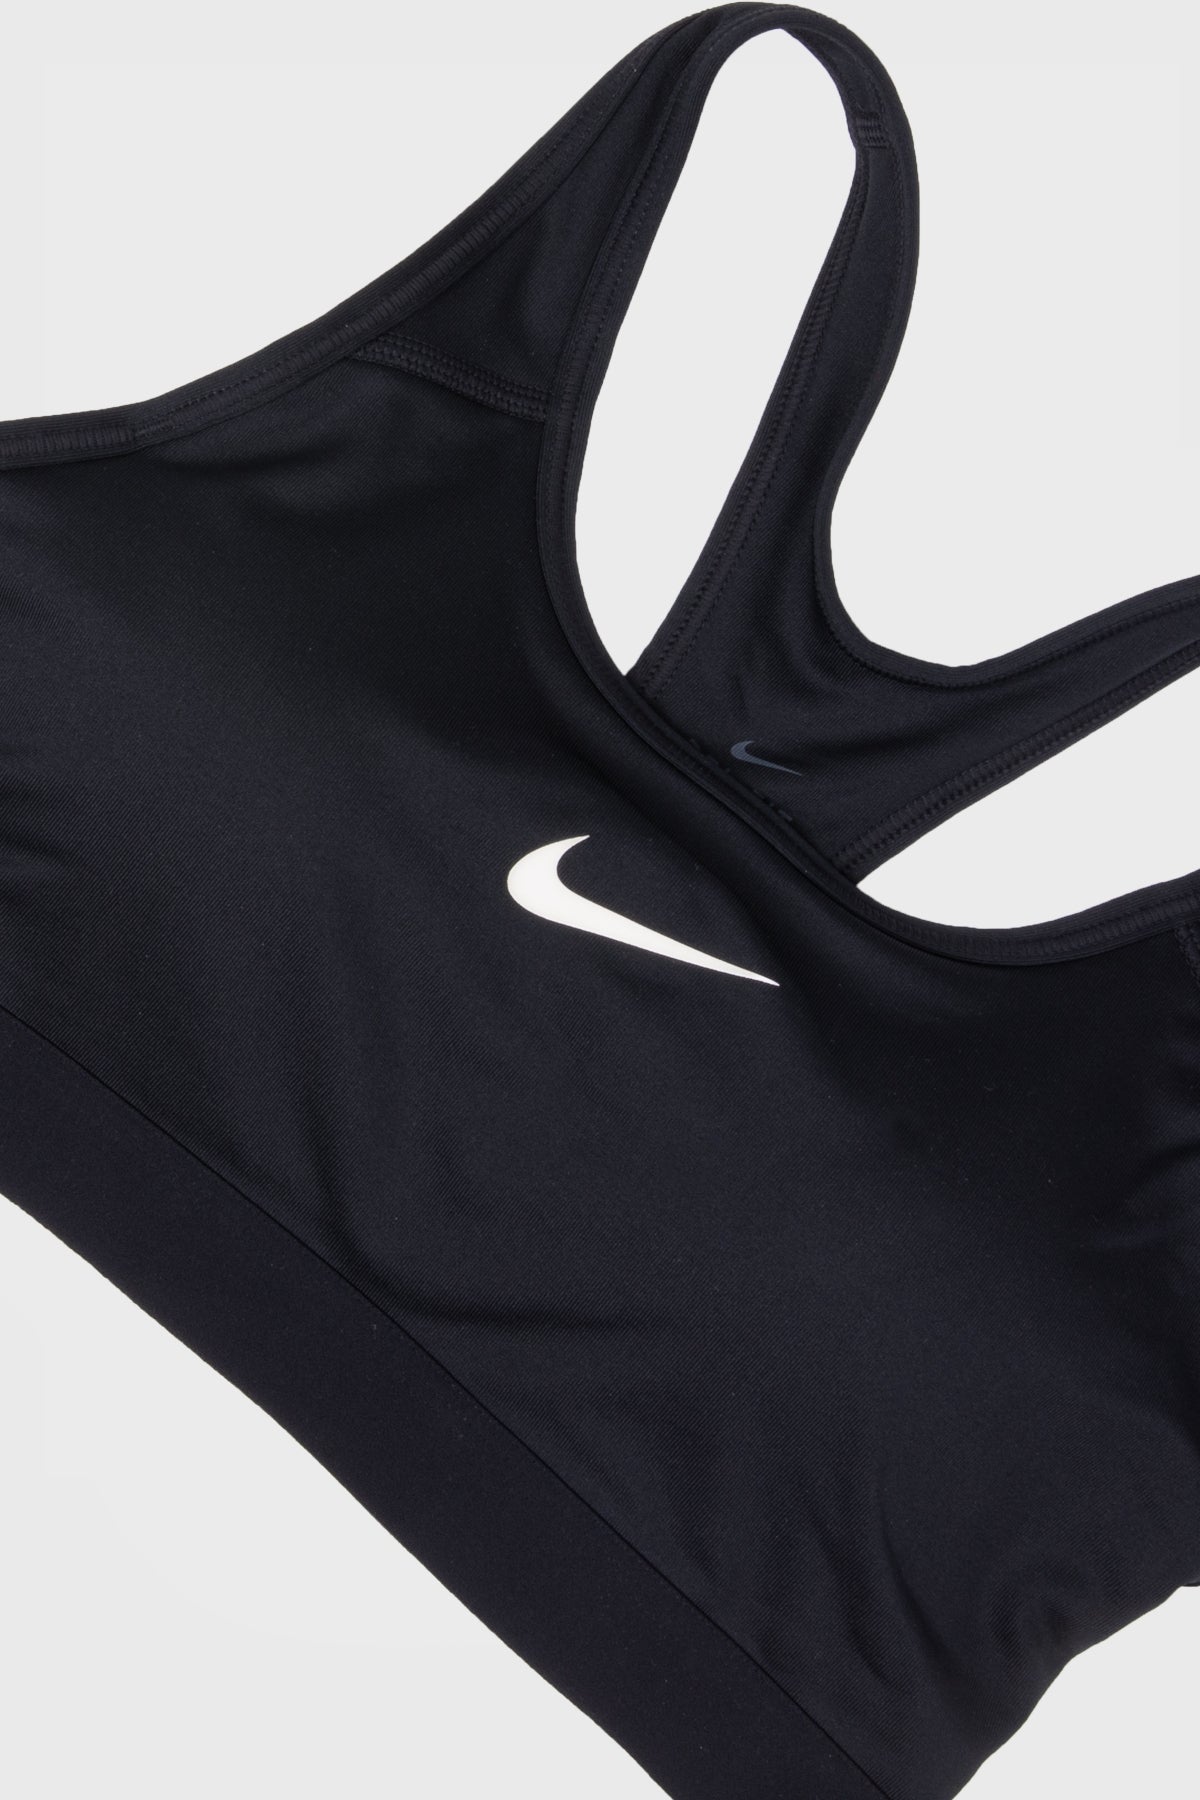 Nike W - Classic padded bra